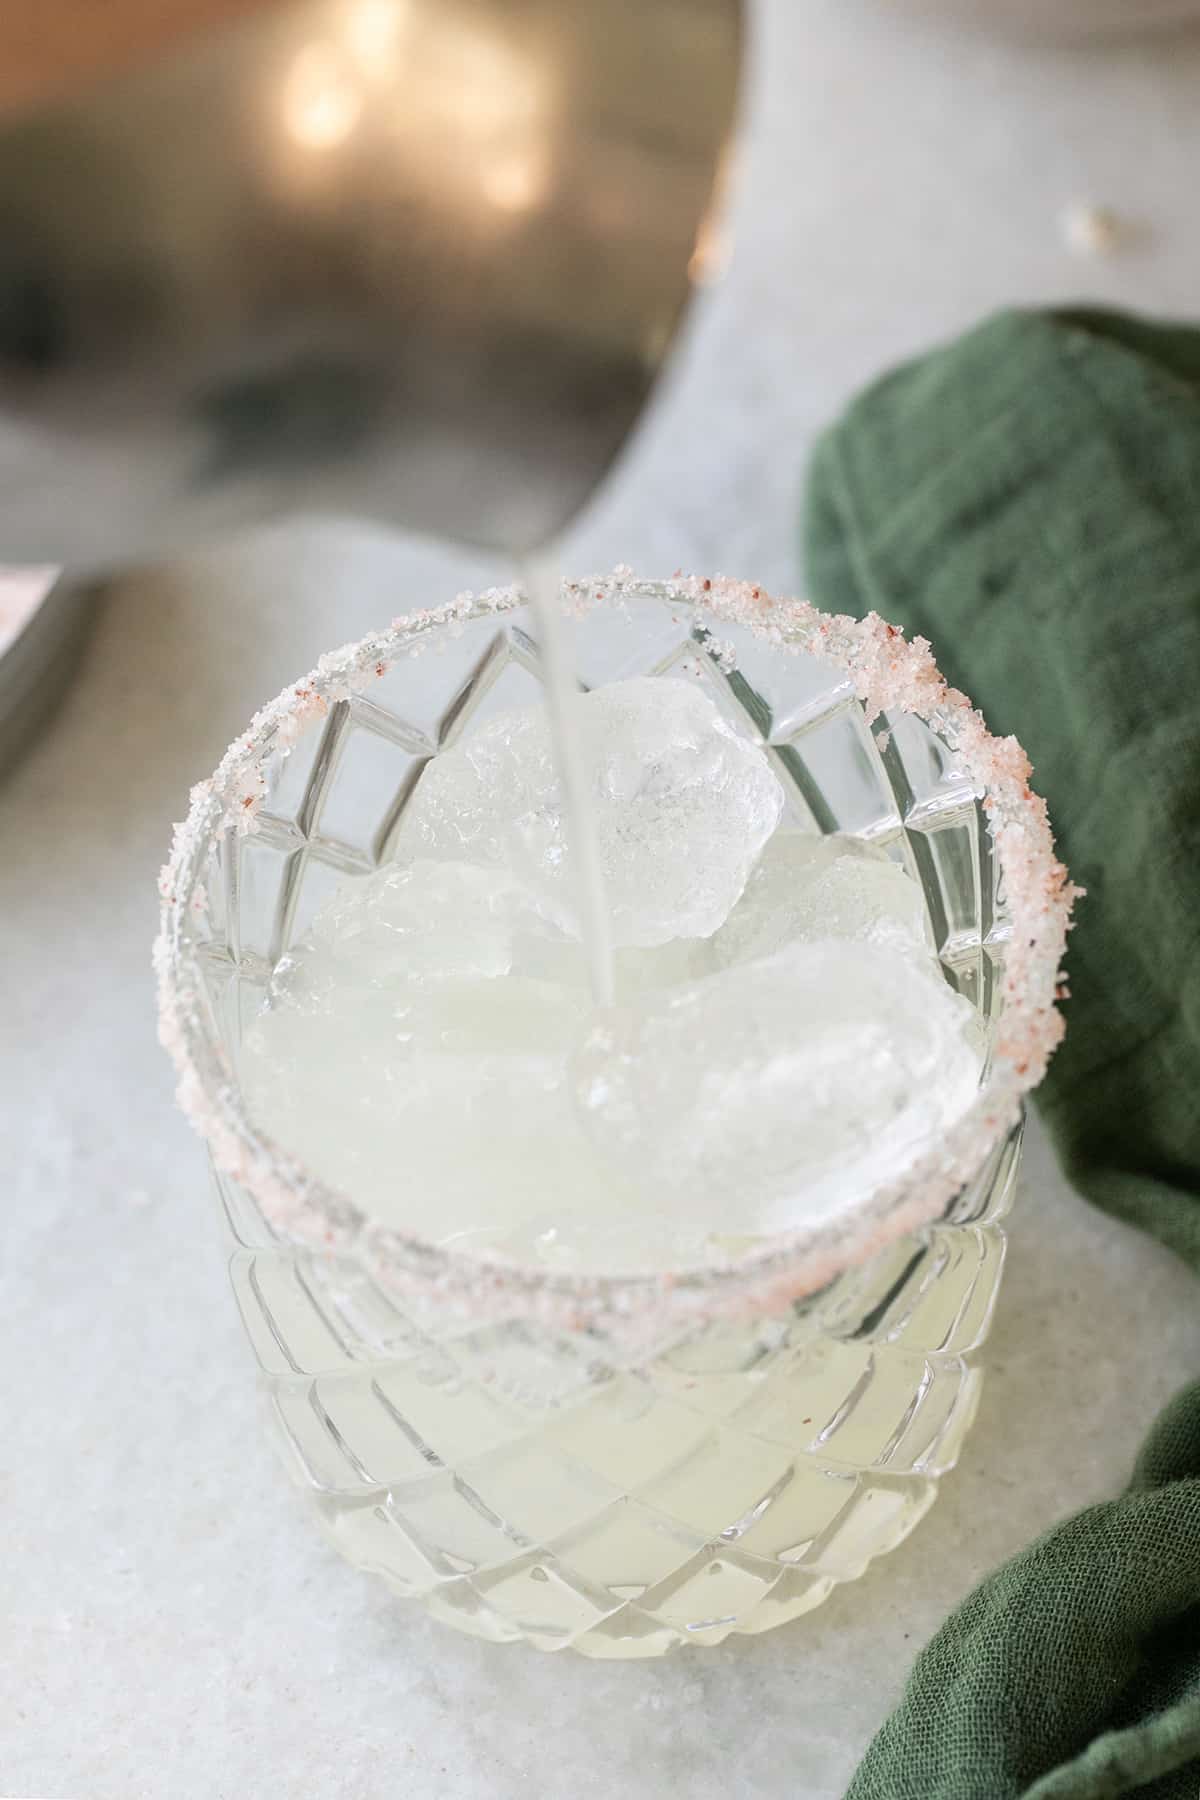 straining a lemon lime drink into a glass.